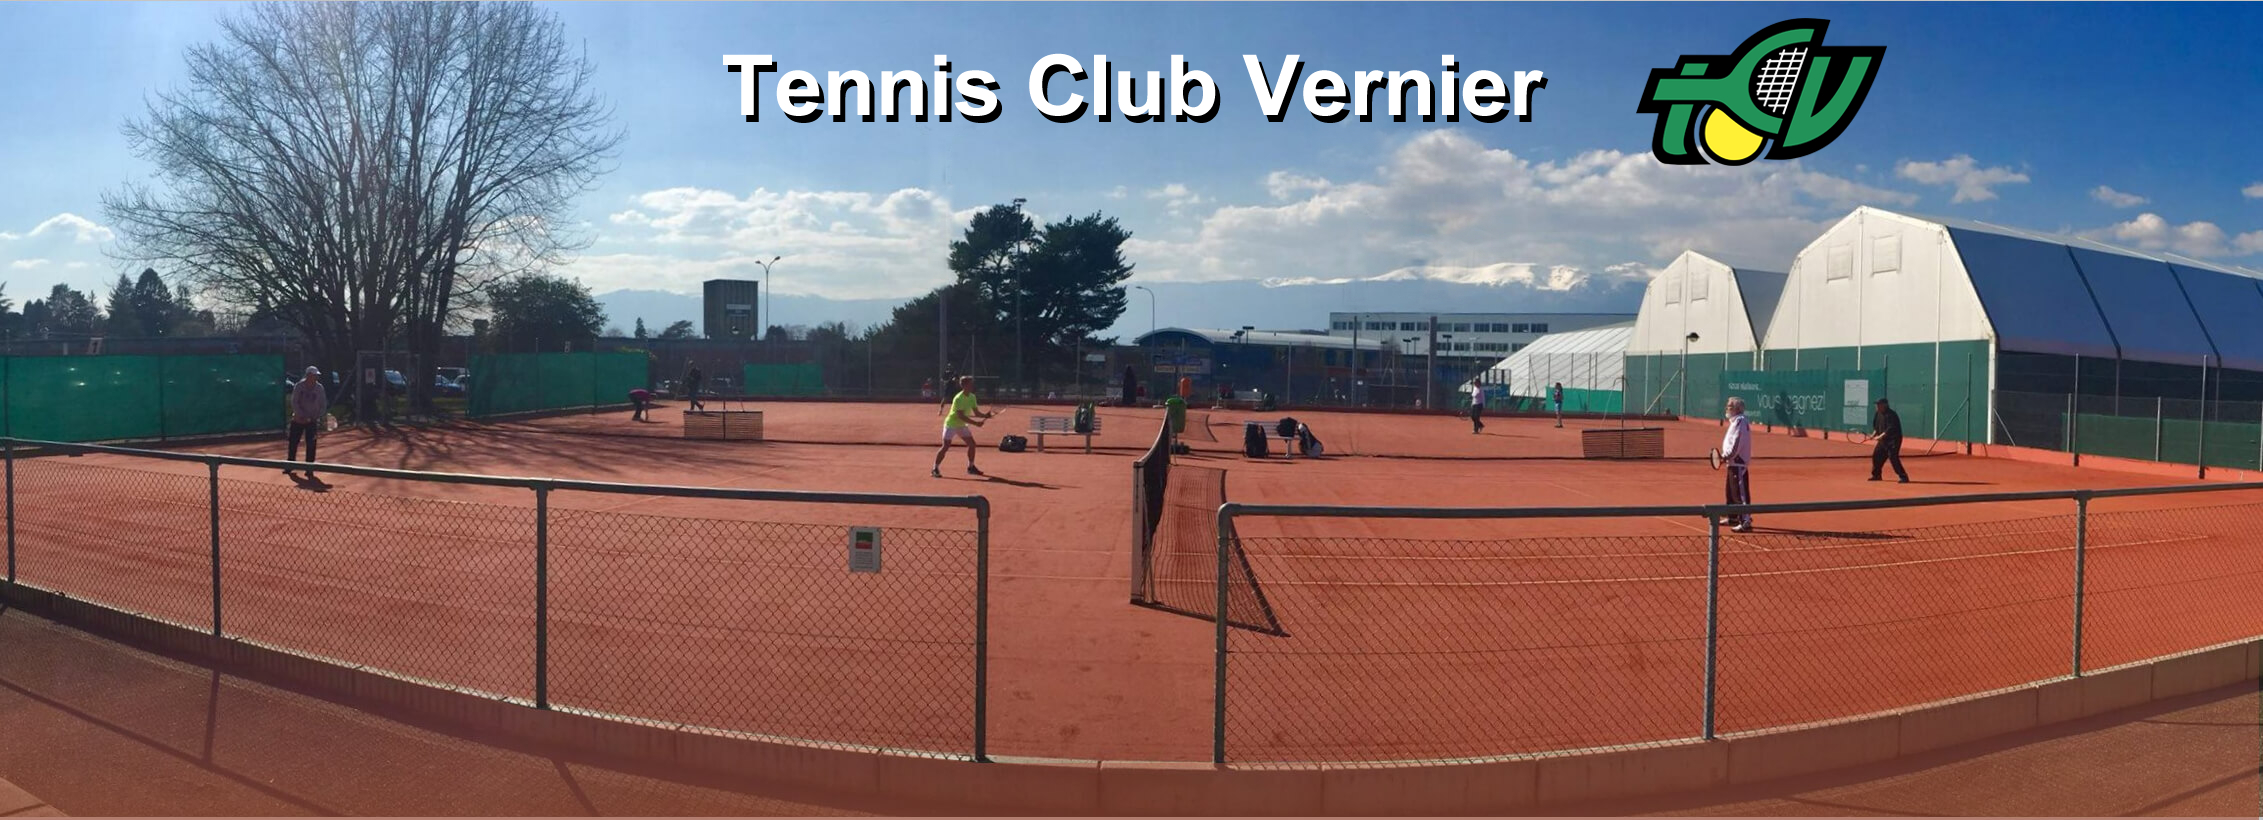 Tennis Club Vernier